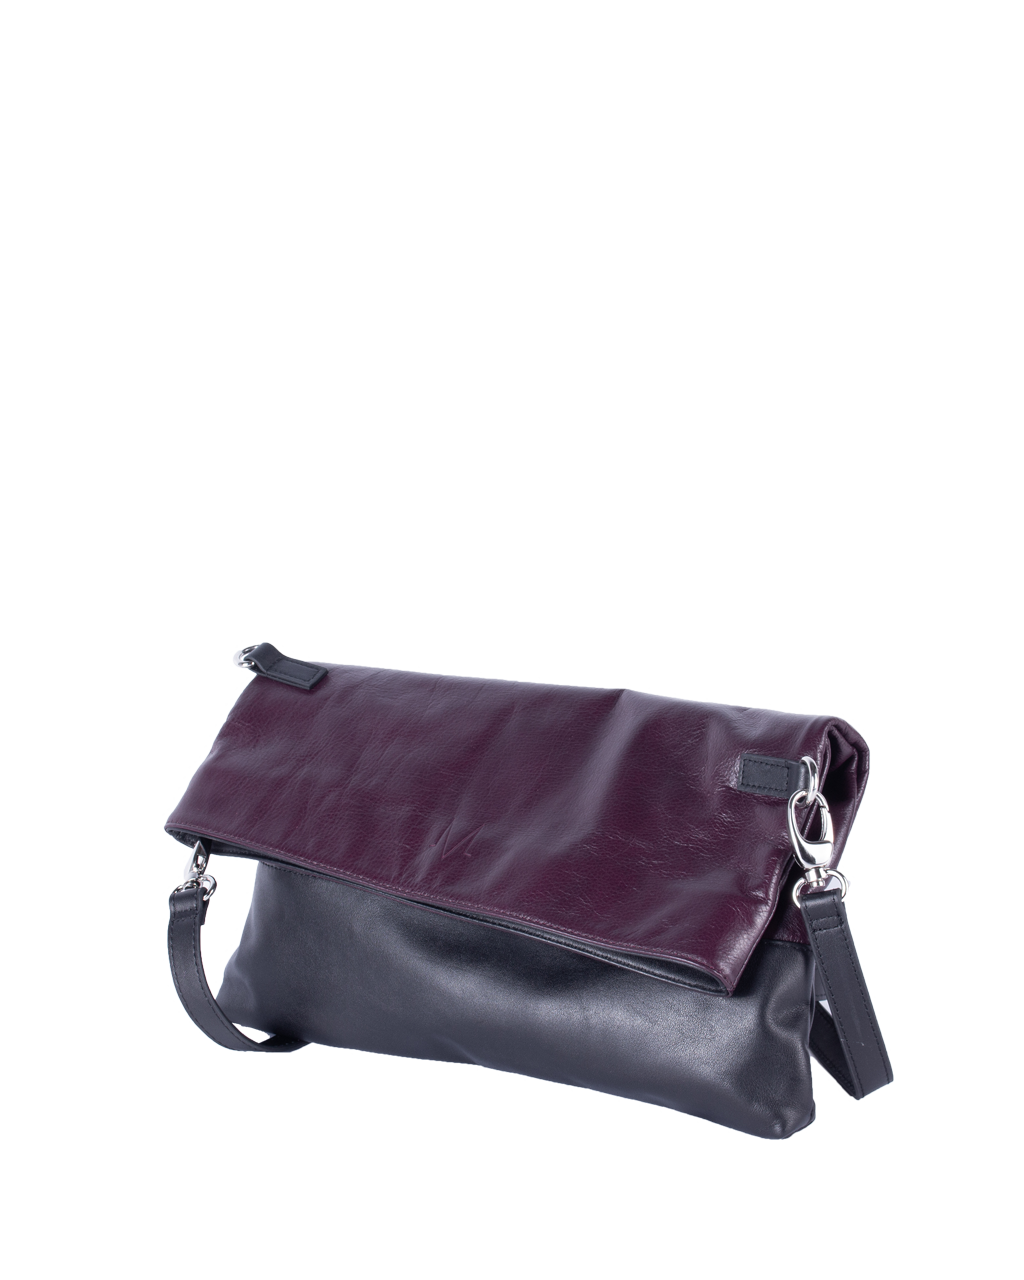 TAT_normcore_14583_twotone fold bag_purple 